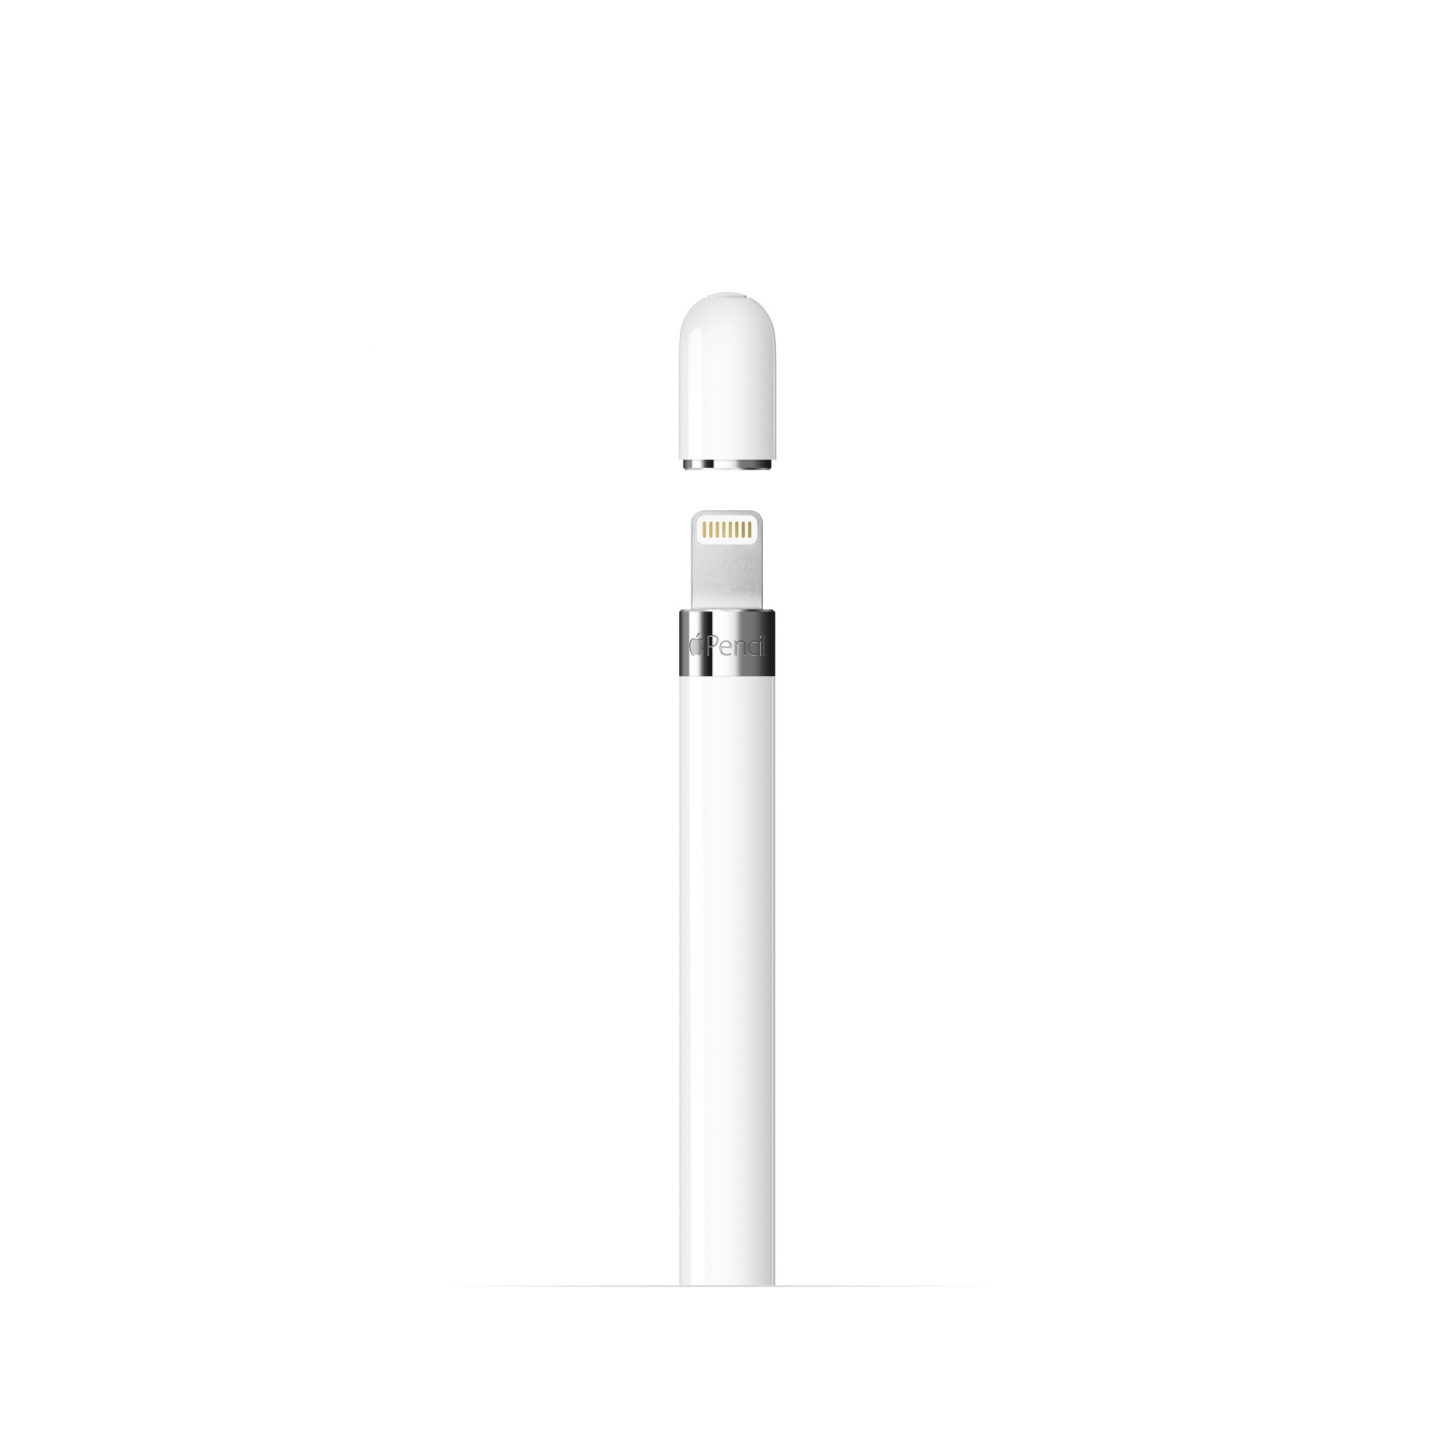 iPad Kompatibilität von Apple Pencil (USB-C)